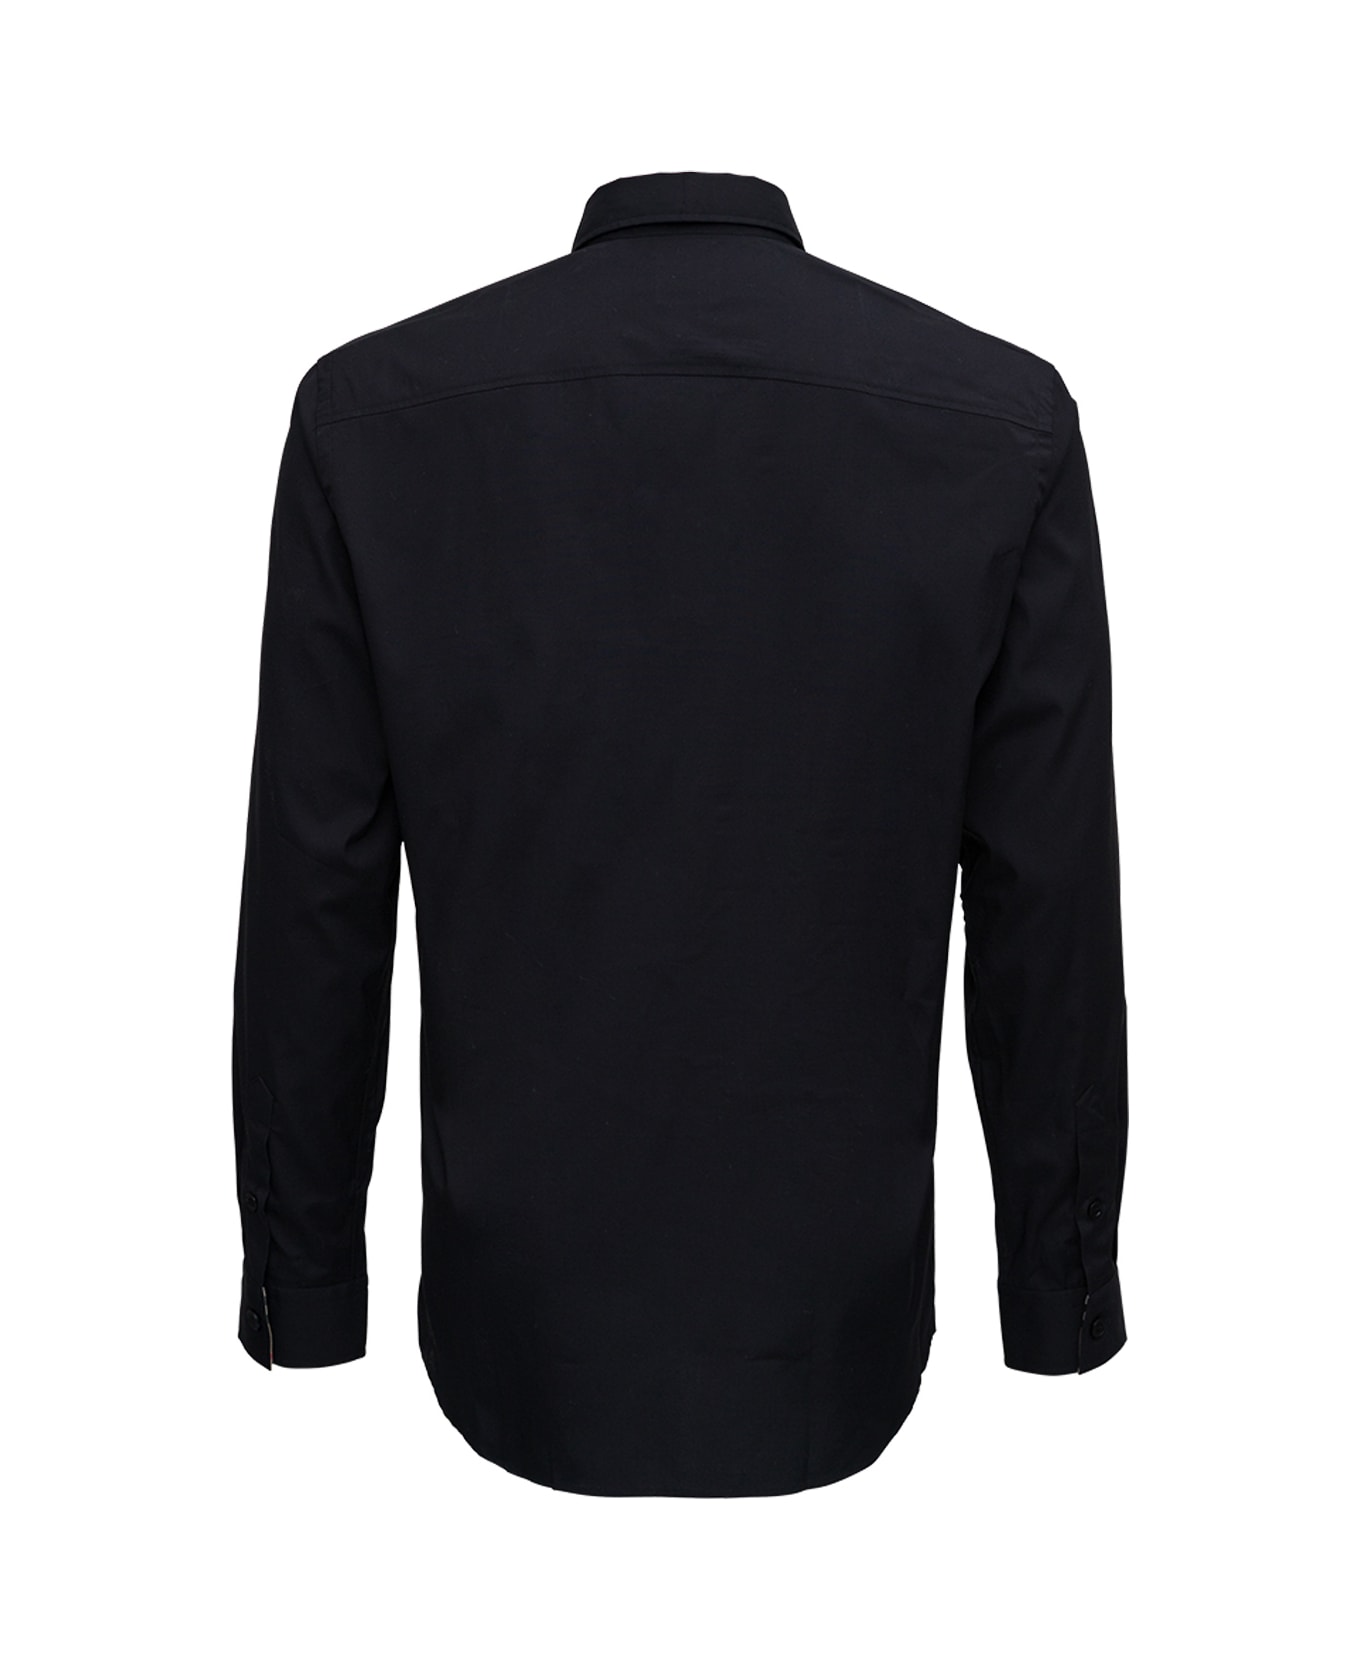 Burberry Man's Black Cotton Polin Shirt With Logo - Black シャツ